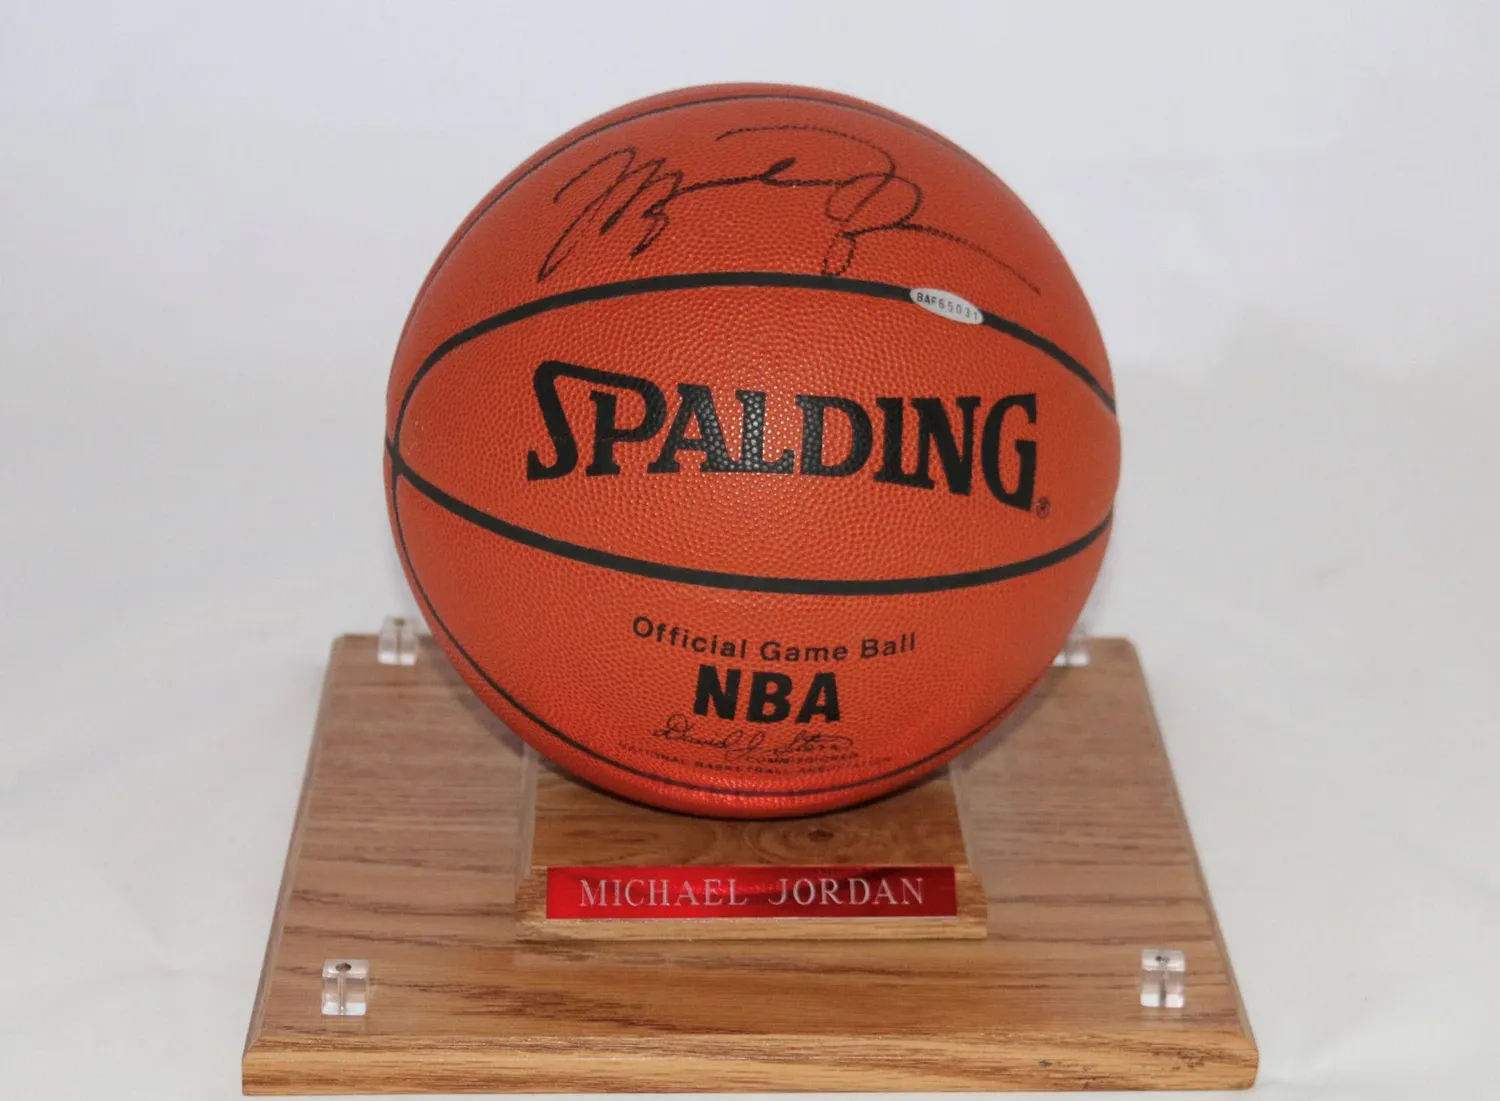 Michael Jordan's signed basketball